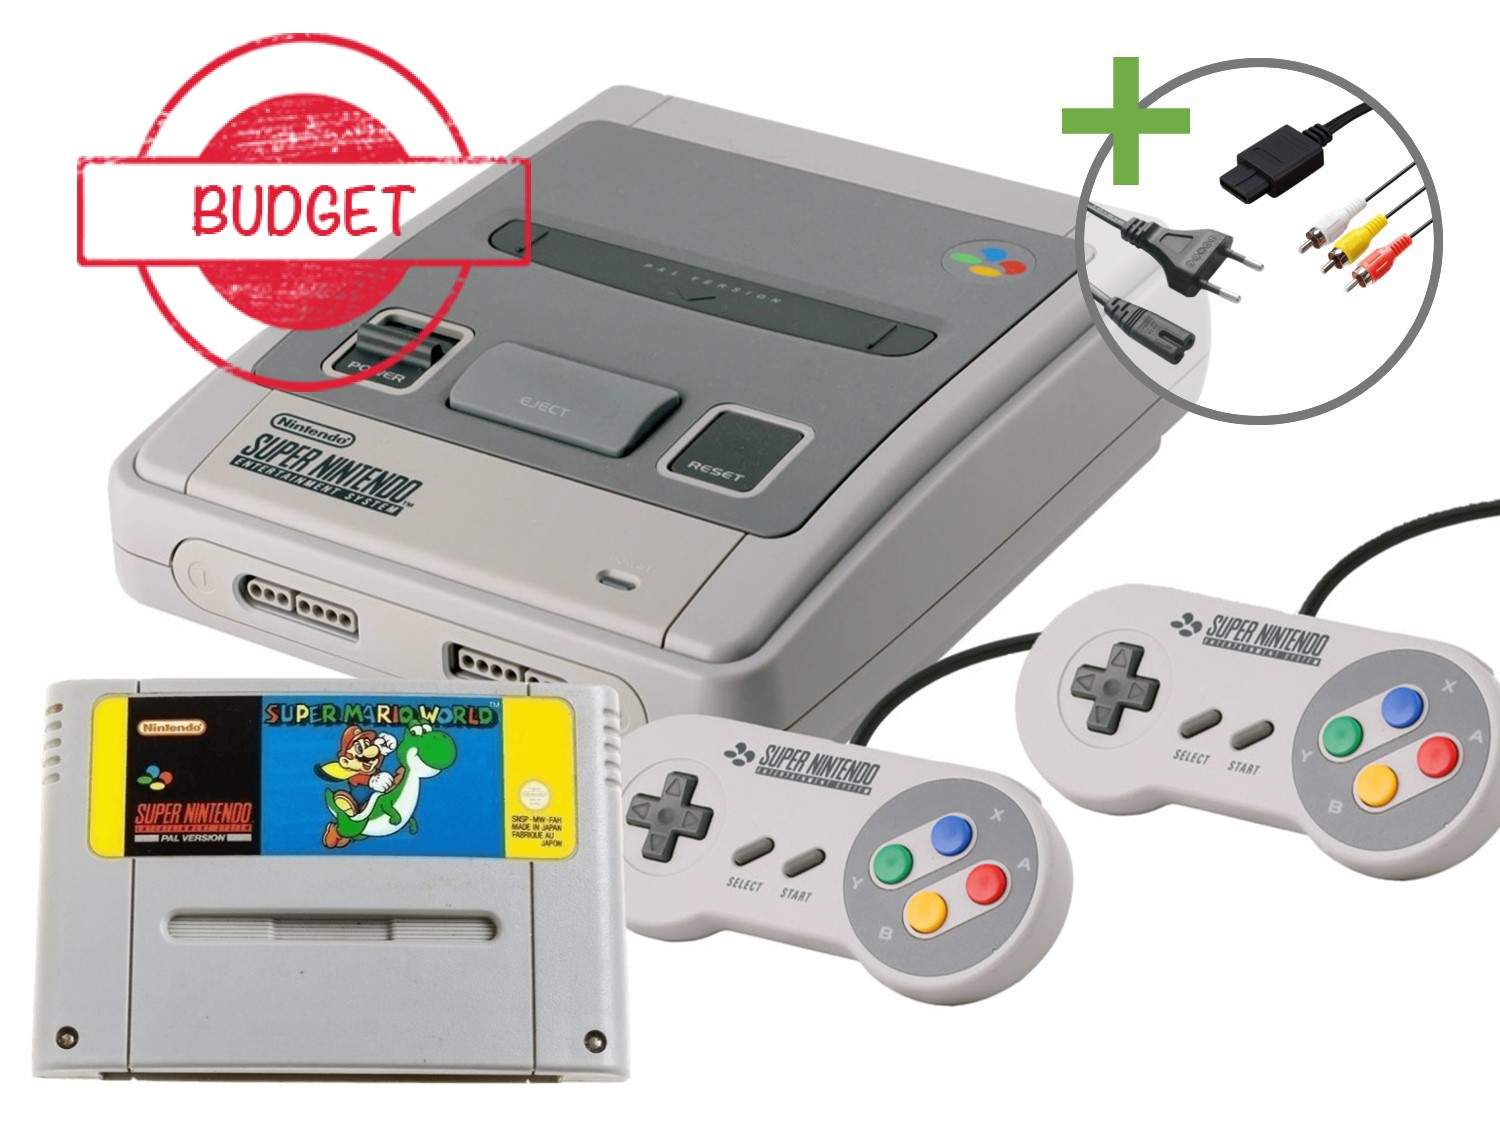 Super Nintendo Starter Pack - Super Mario World Edition - Budget - Super Nintendo Hardware